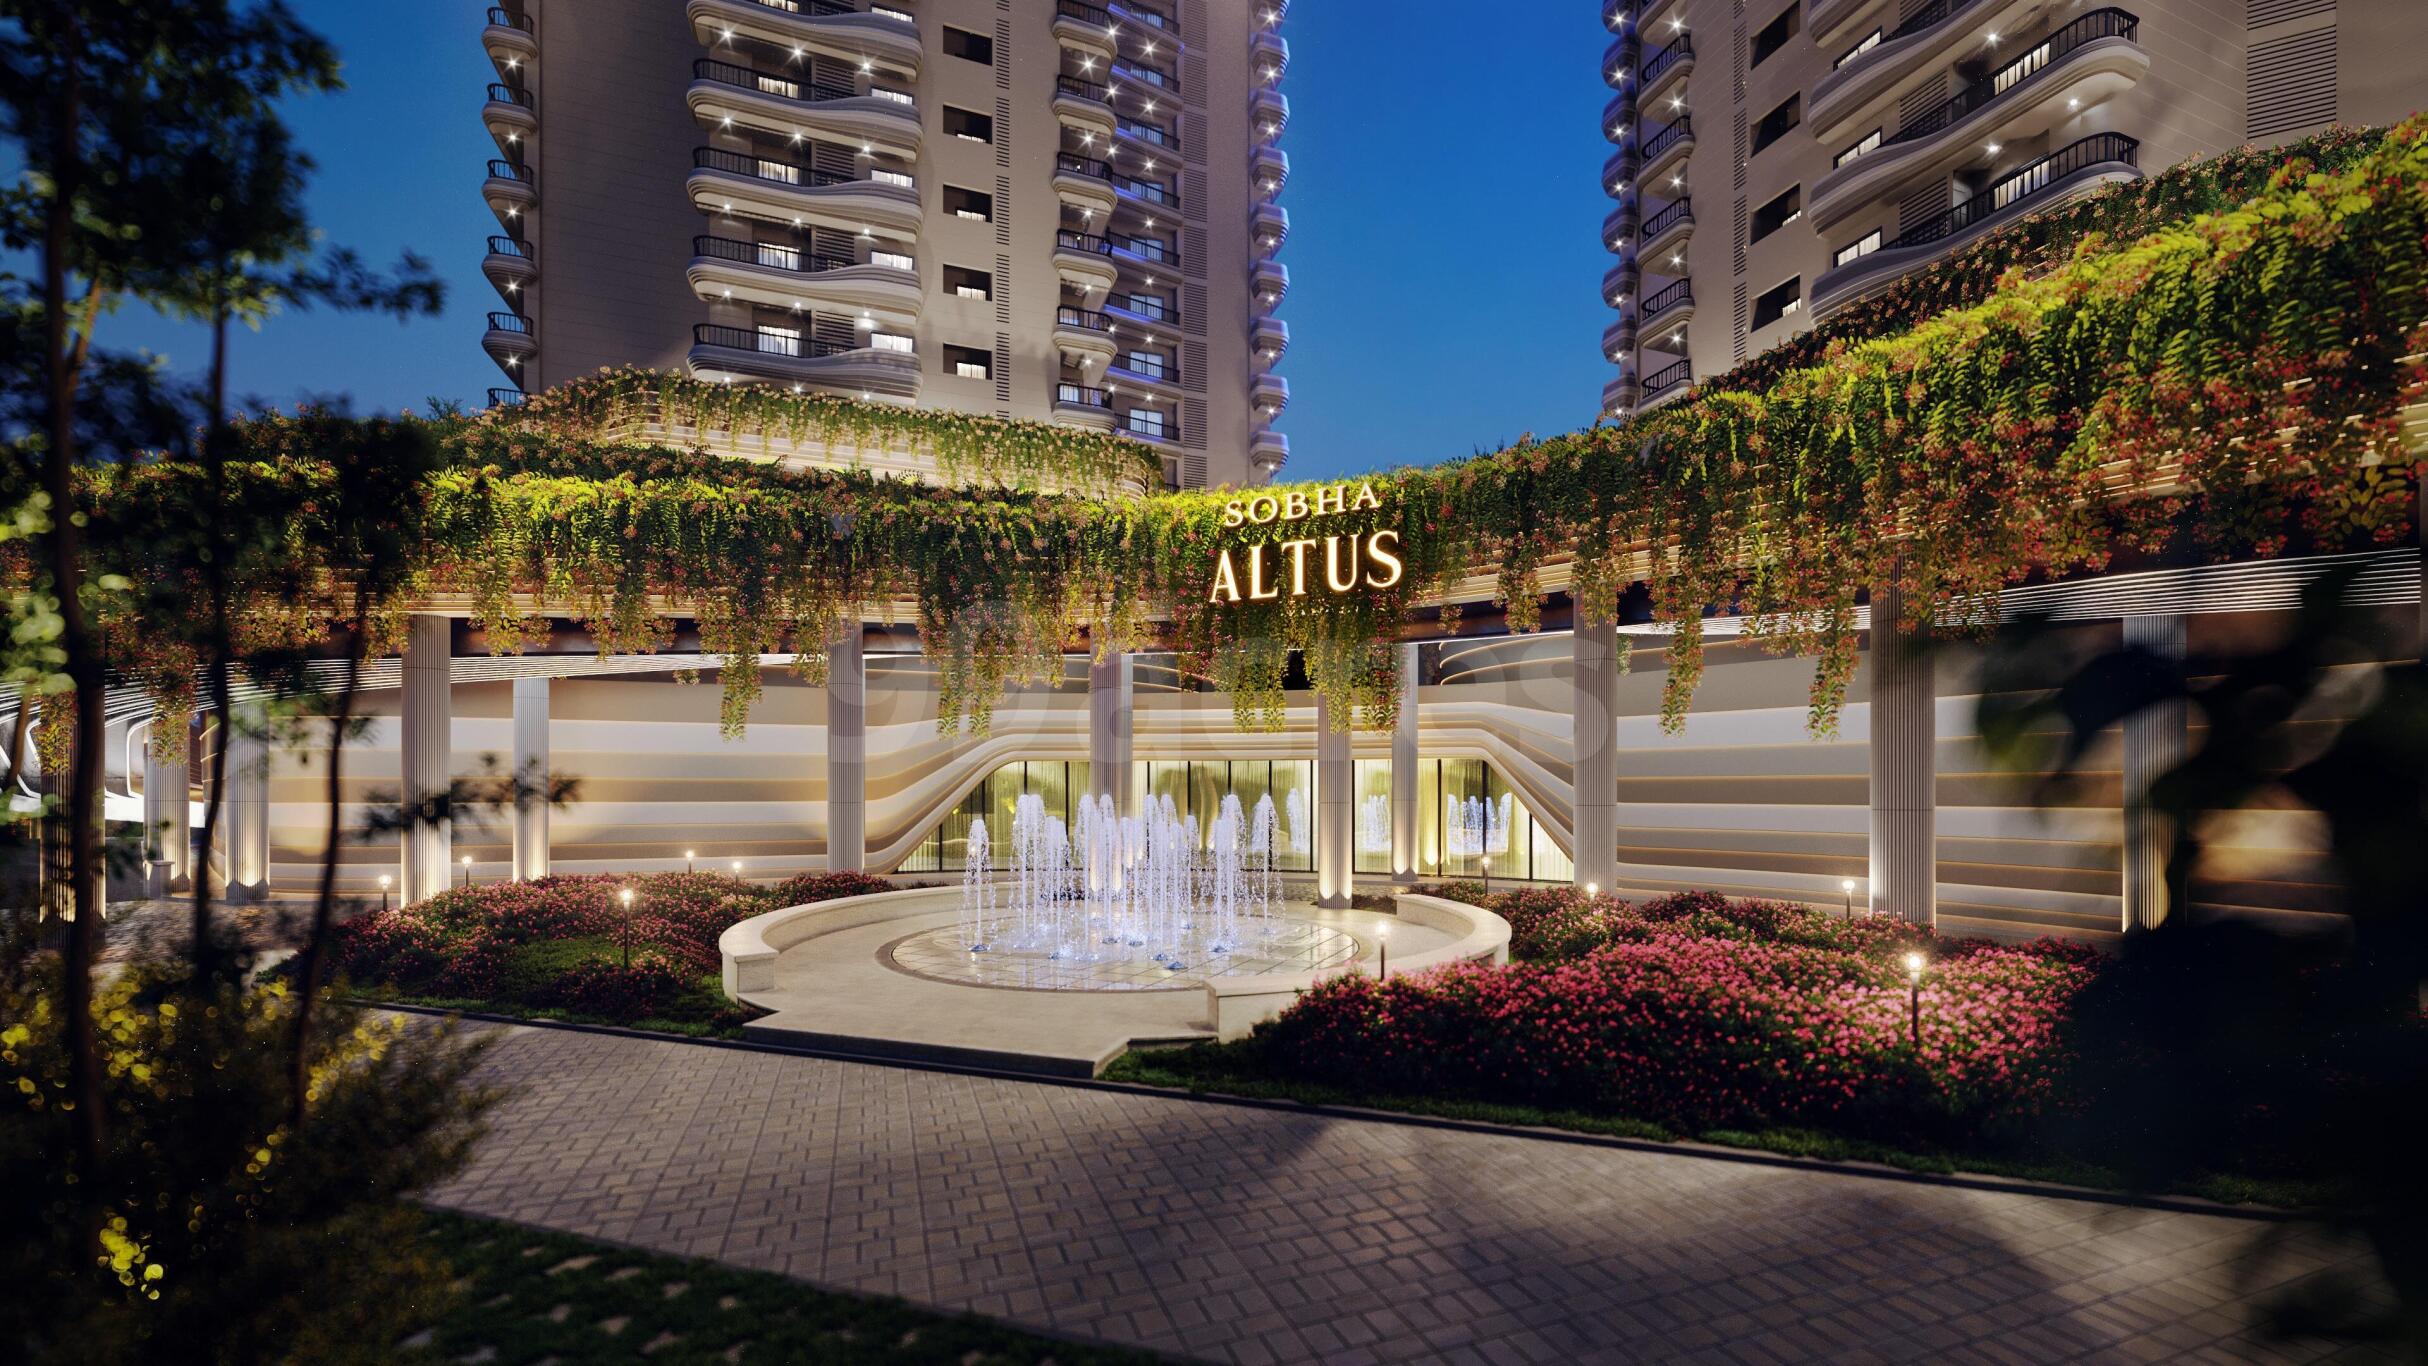 Invest in Luxury Buy Sobha Altus Sector 106 Gurgaon Apartments